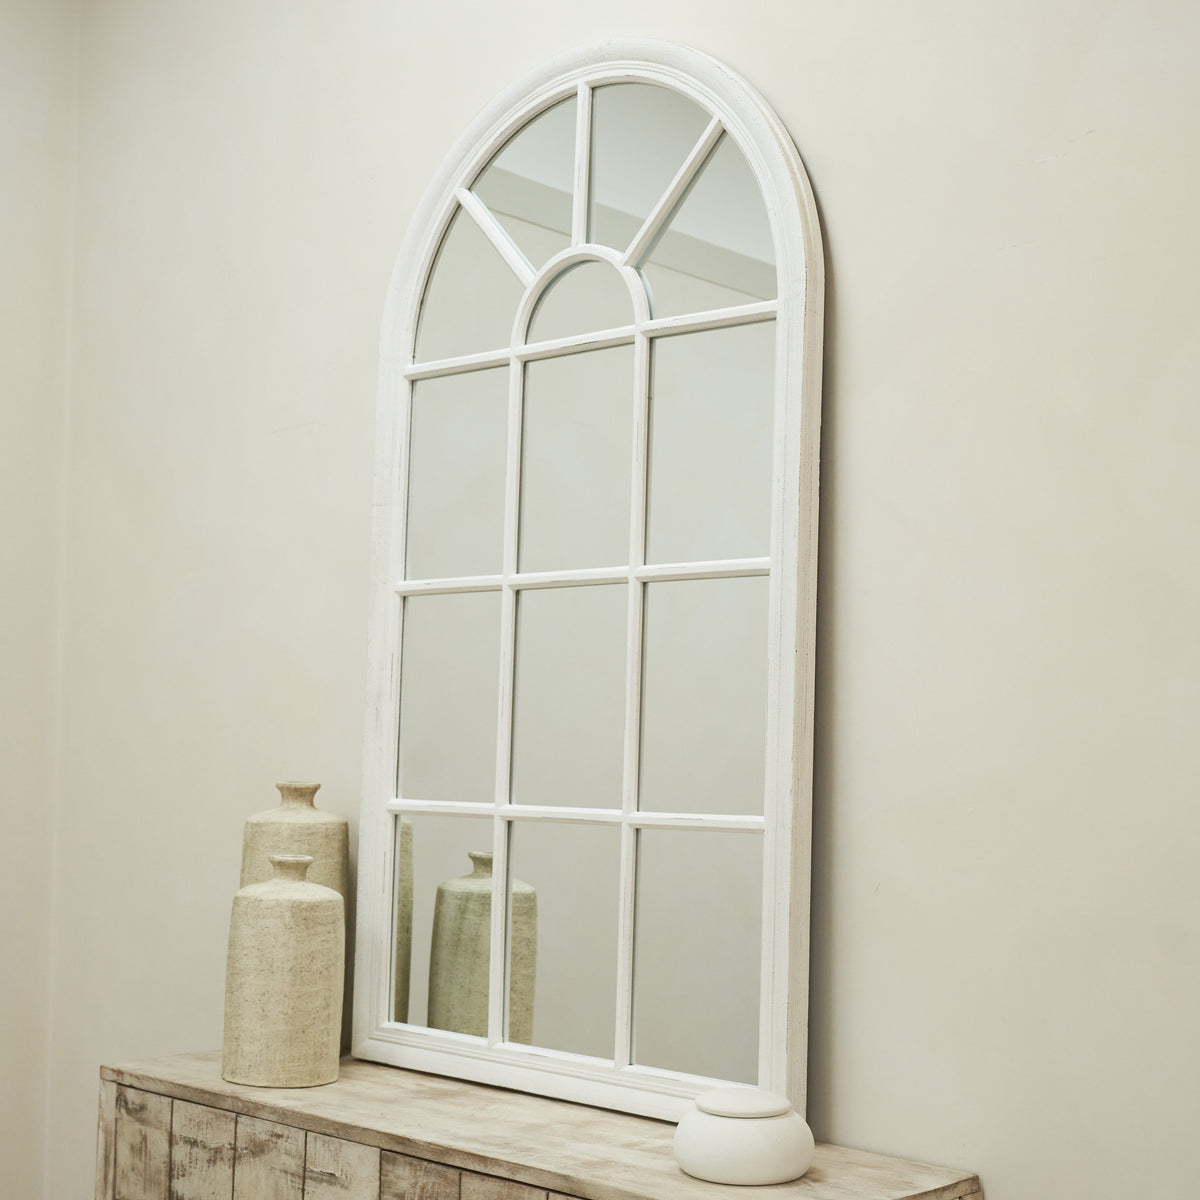 Arabella - Large White Arched Shabby Chic Window Mirror 140cm x 80cm